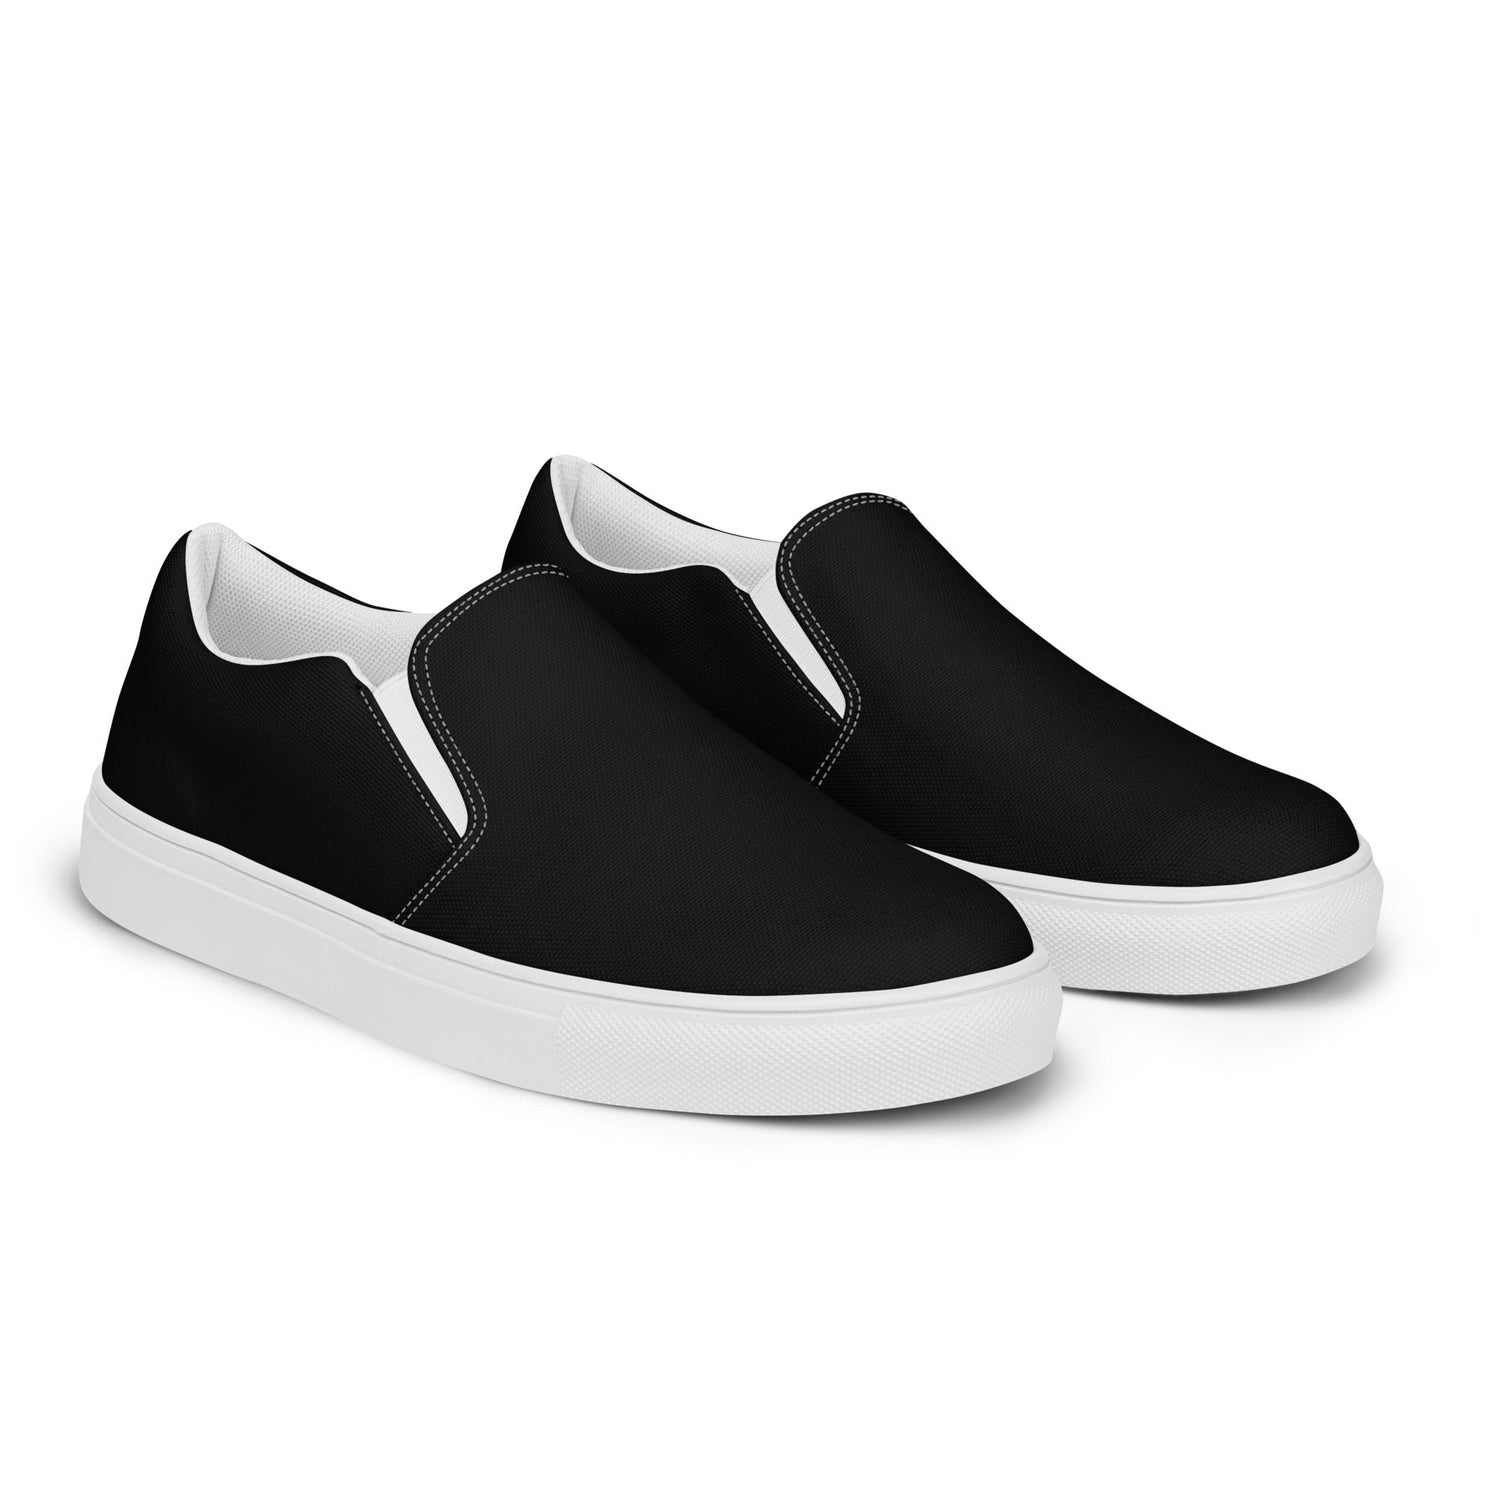 klasneakers Women’s slip-on canvas shoes - Jet Black